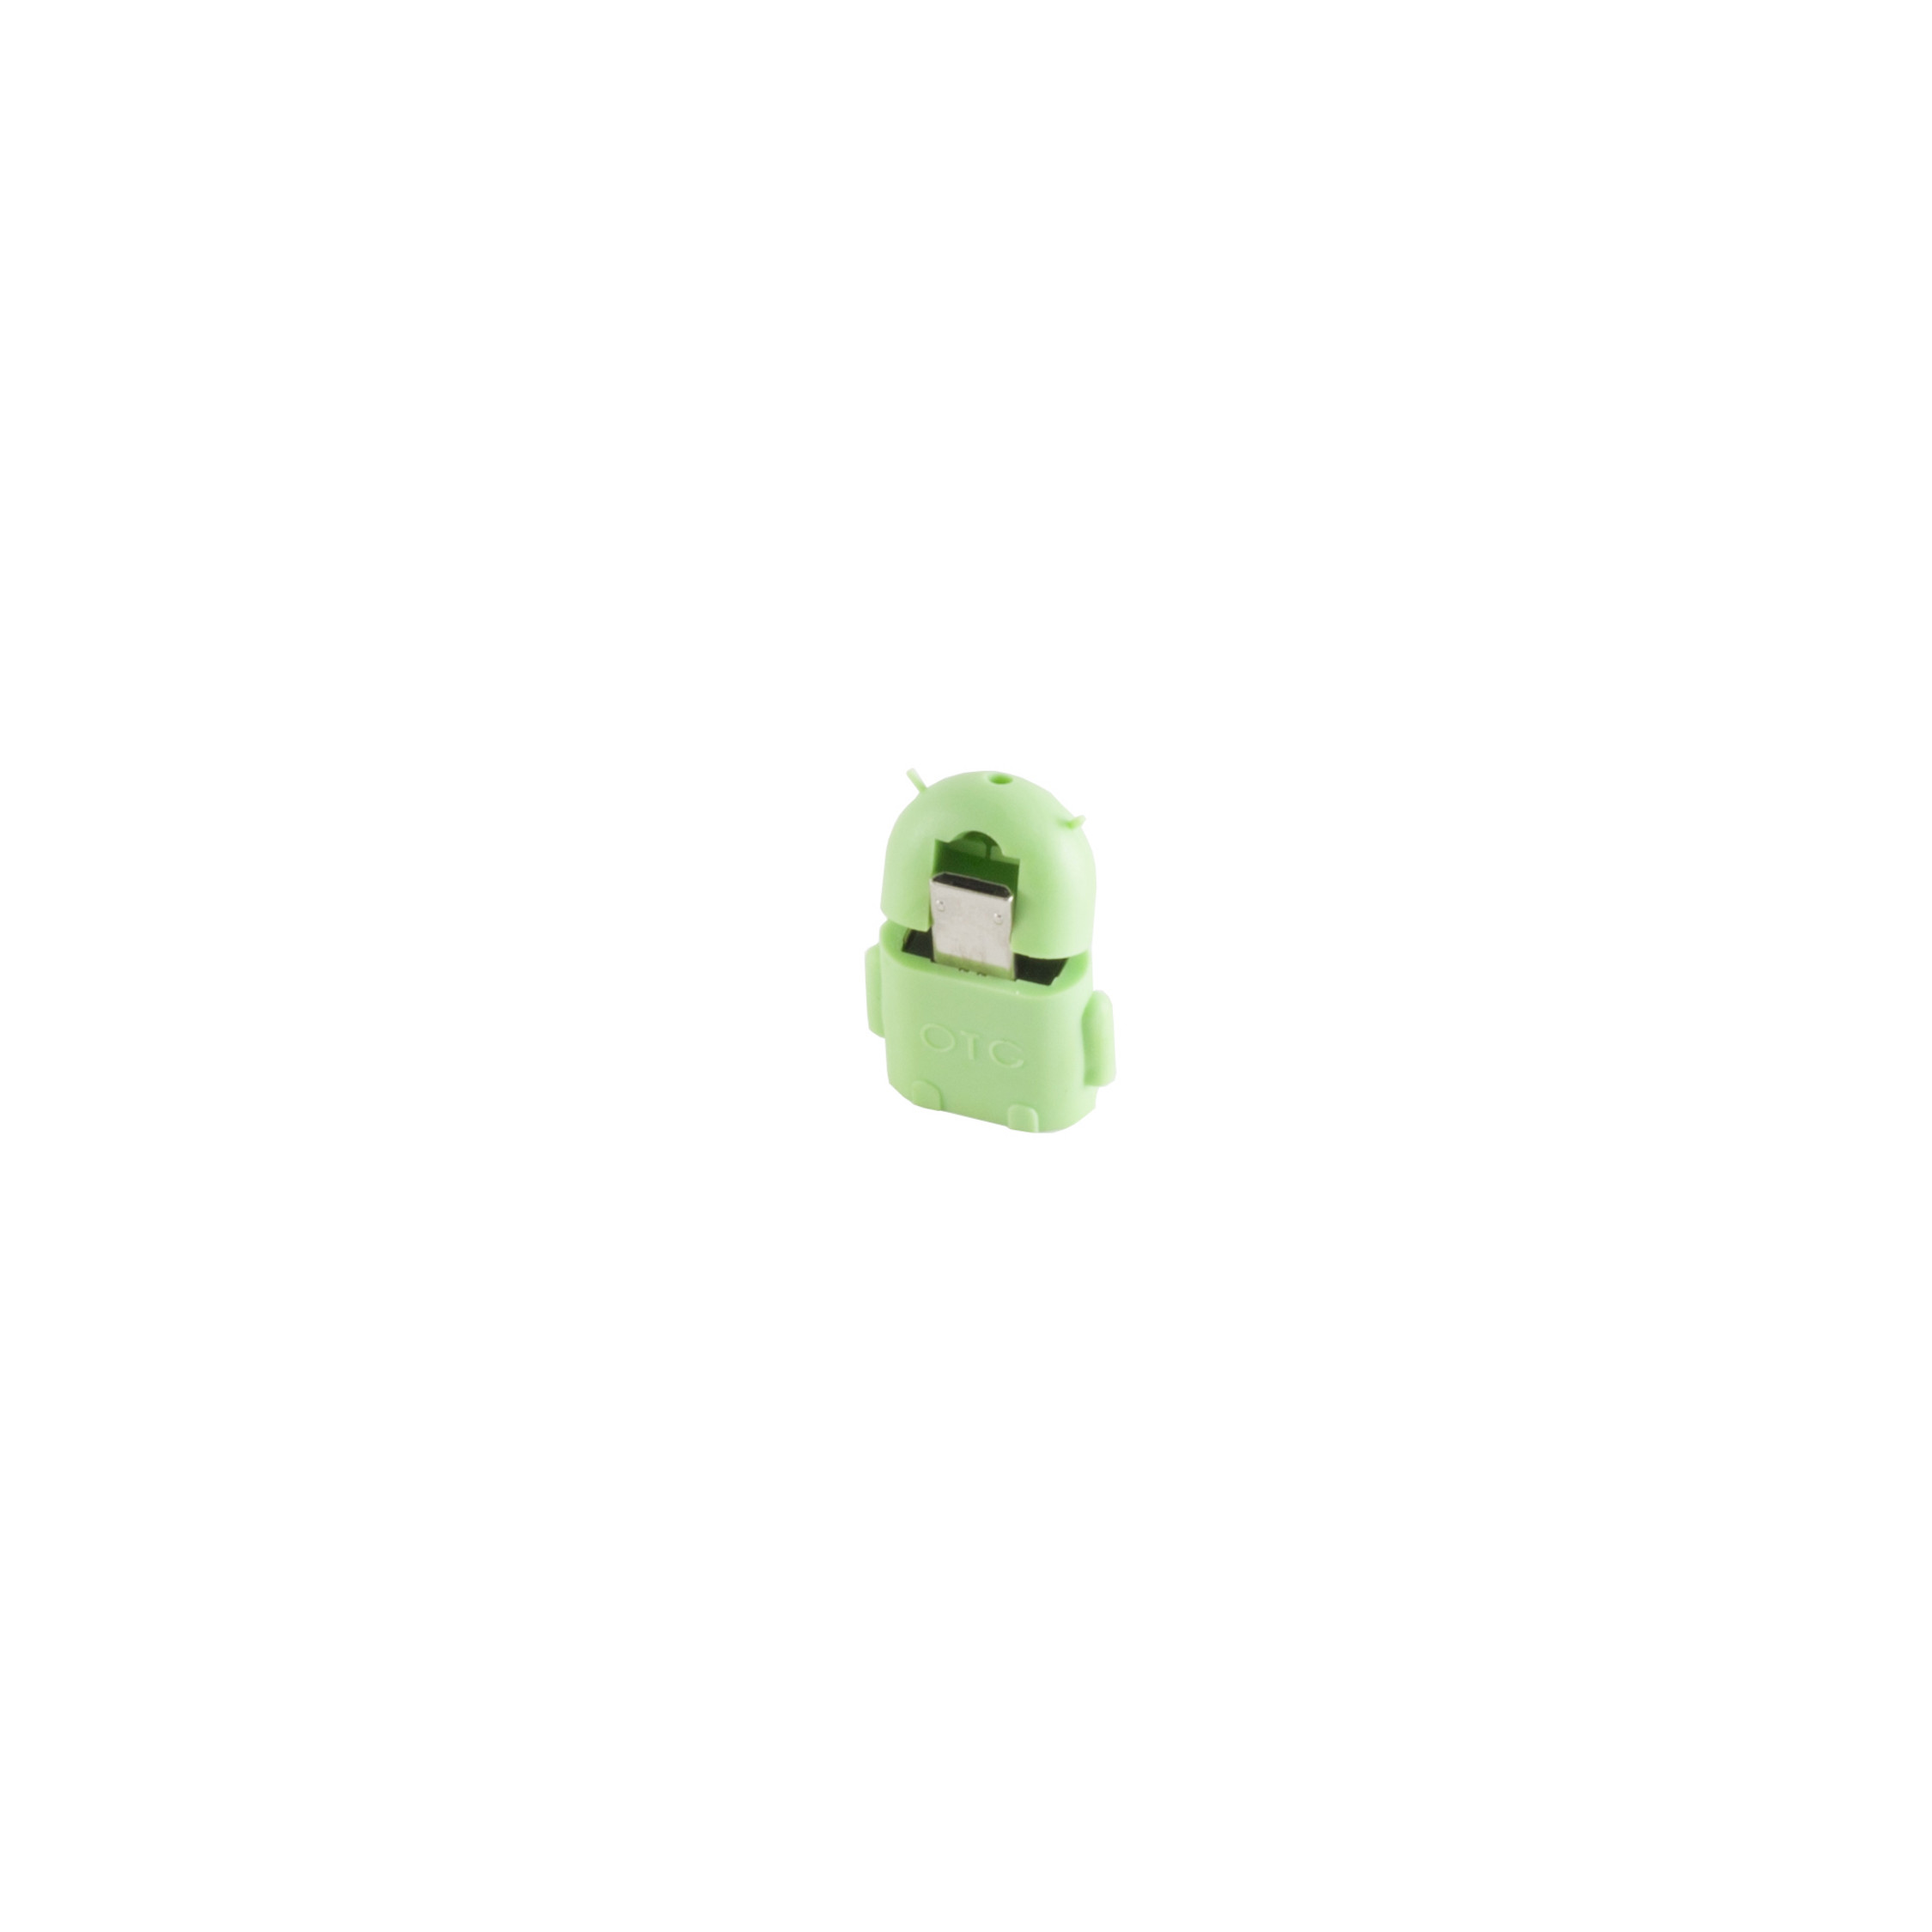 Adapter 2.0, grün USB KABELBUDE A-Buchse USB-OTG Stecker Micro-B auf